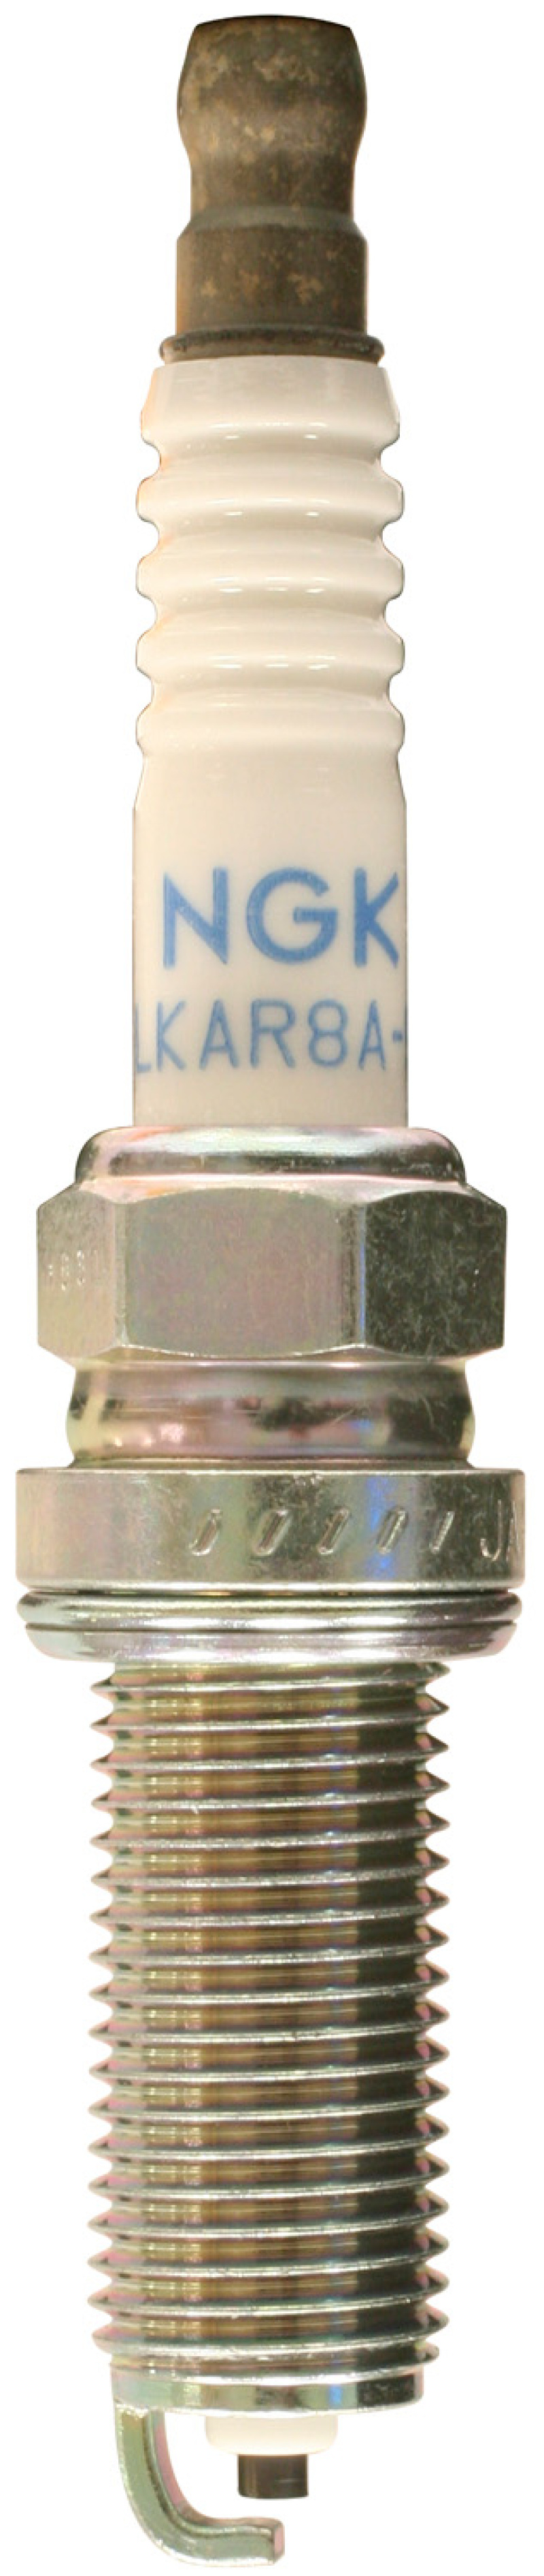 NGK Nickel Spark Plug Box of 10 (LKAR8A-9) - 4786